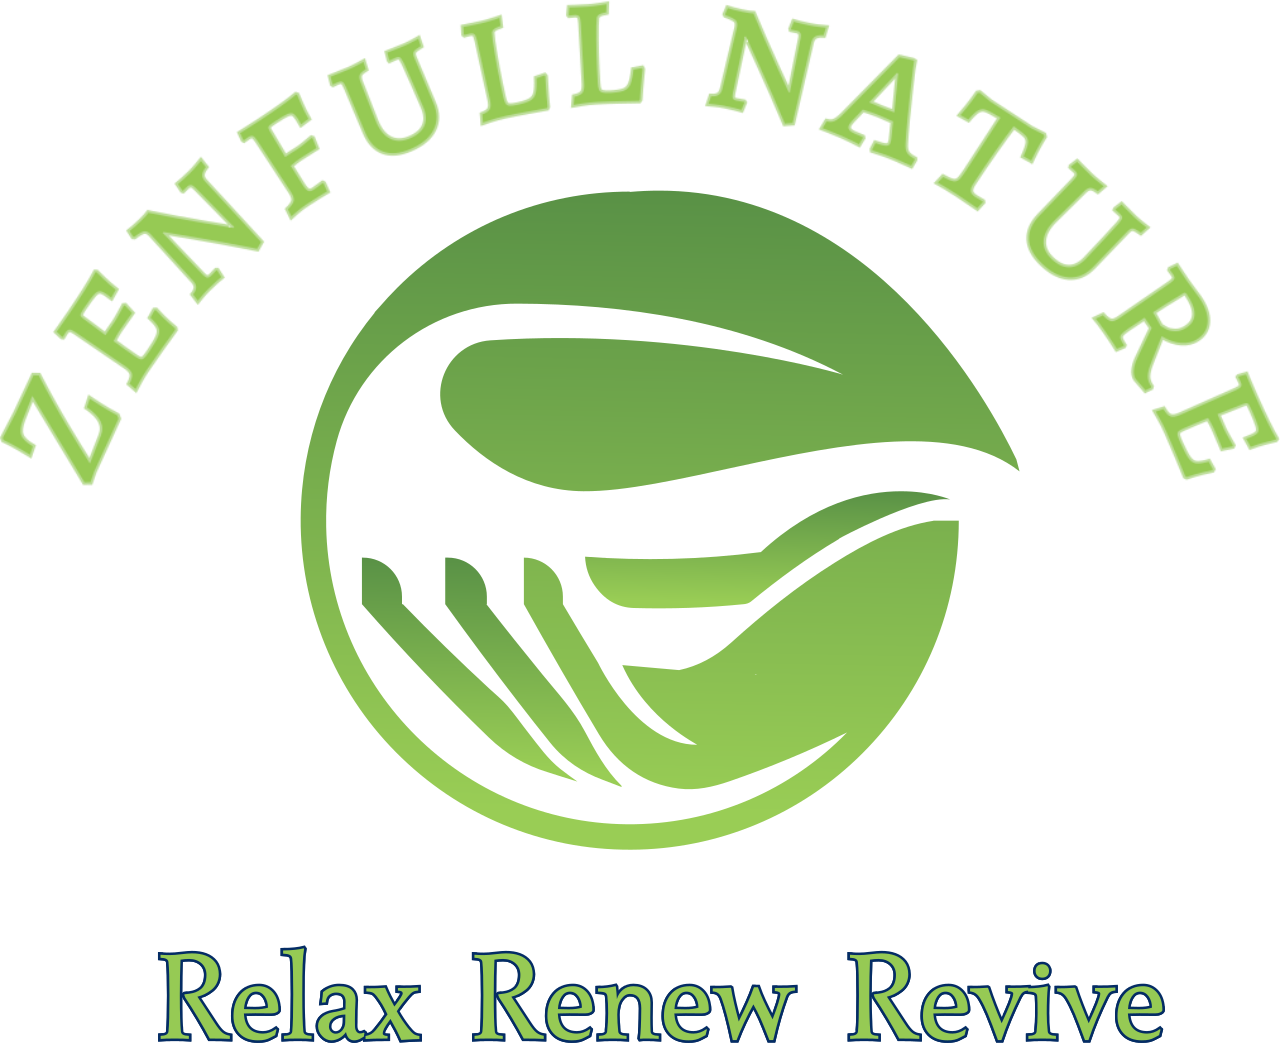 zenfull nature's logo